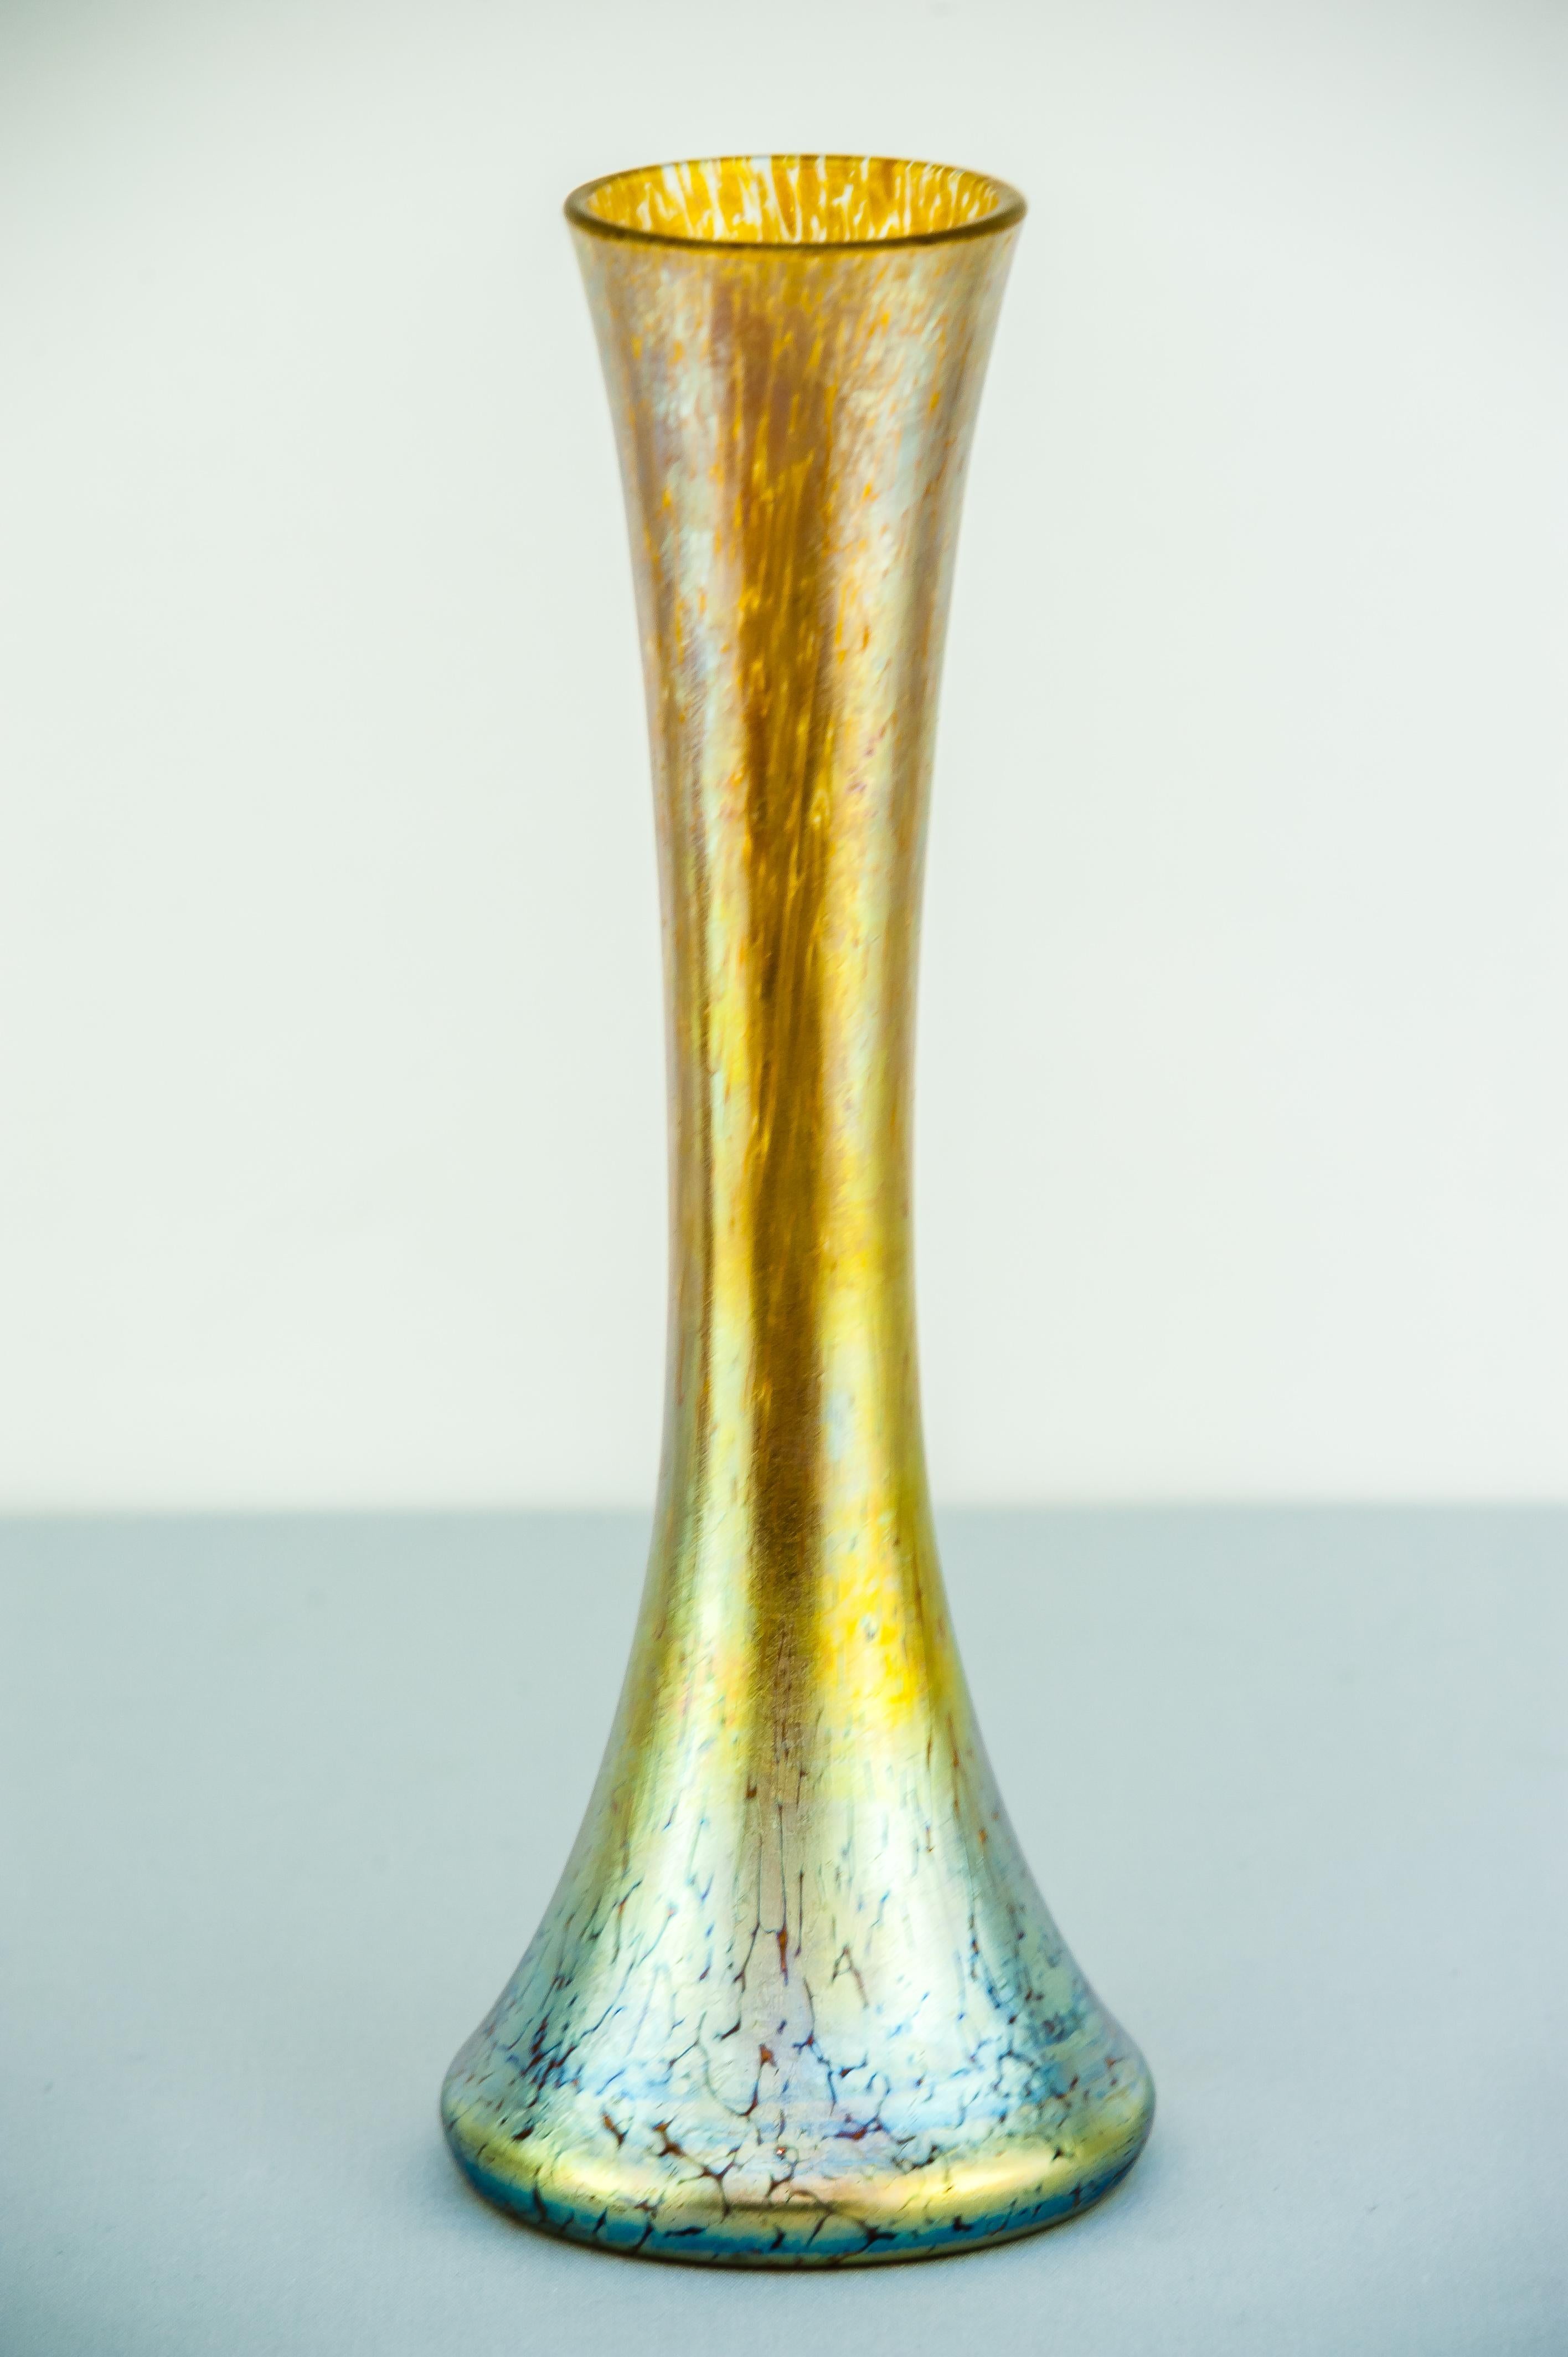 Jugendstil Loetz vase, circa 1903
Original condition.